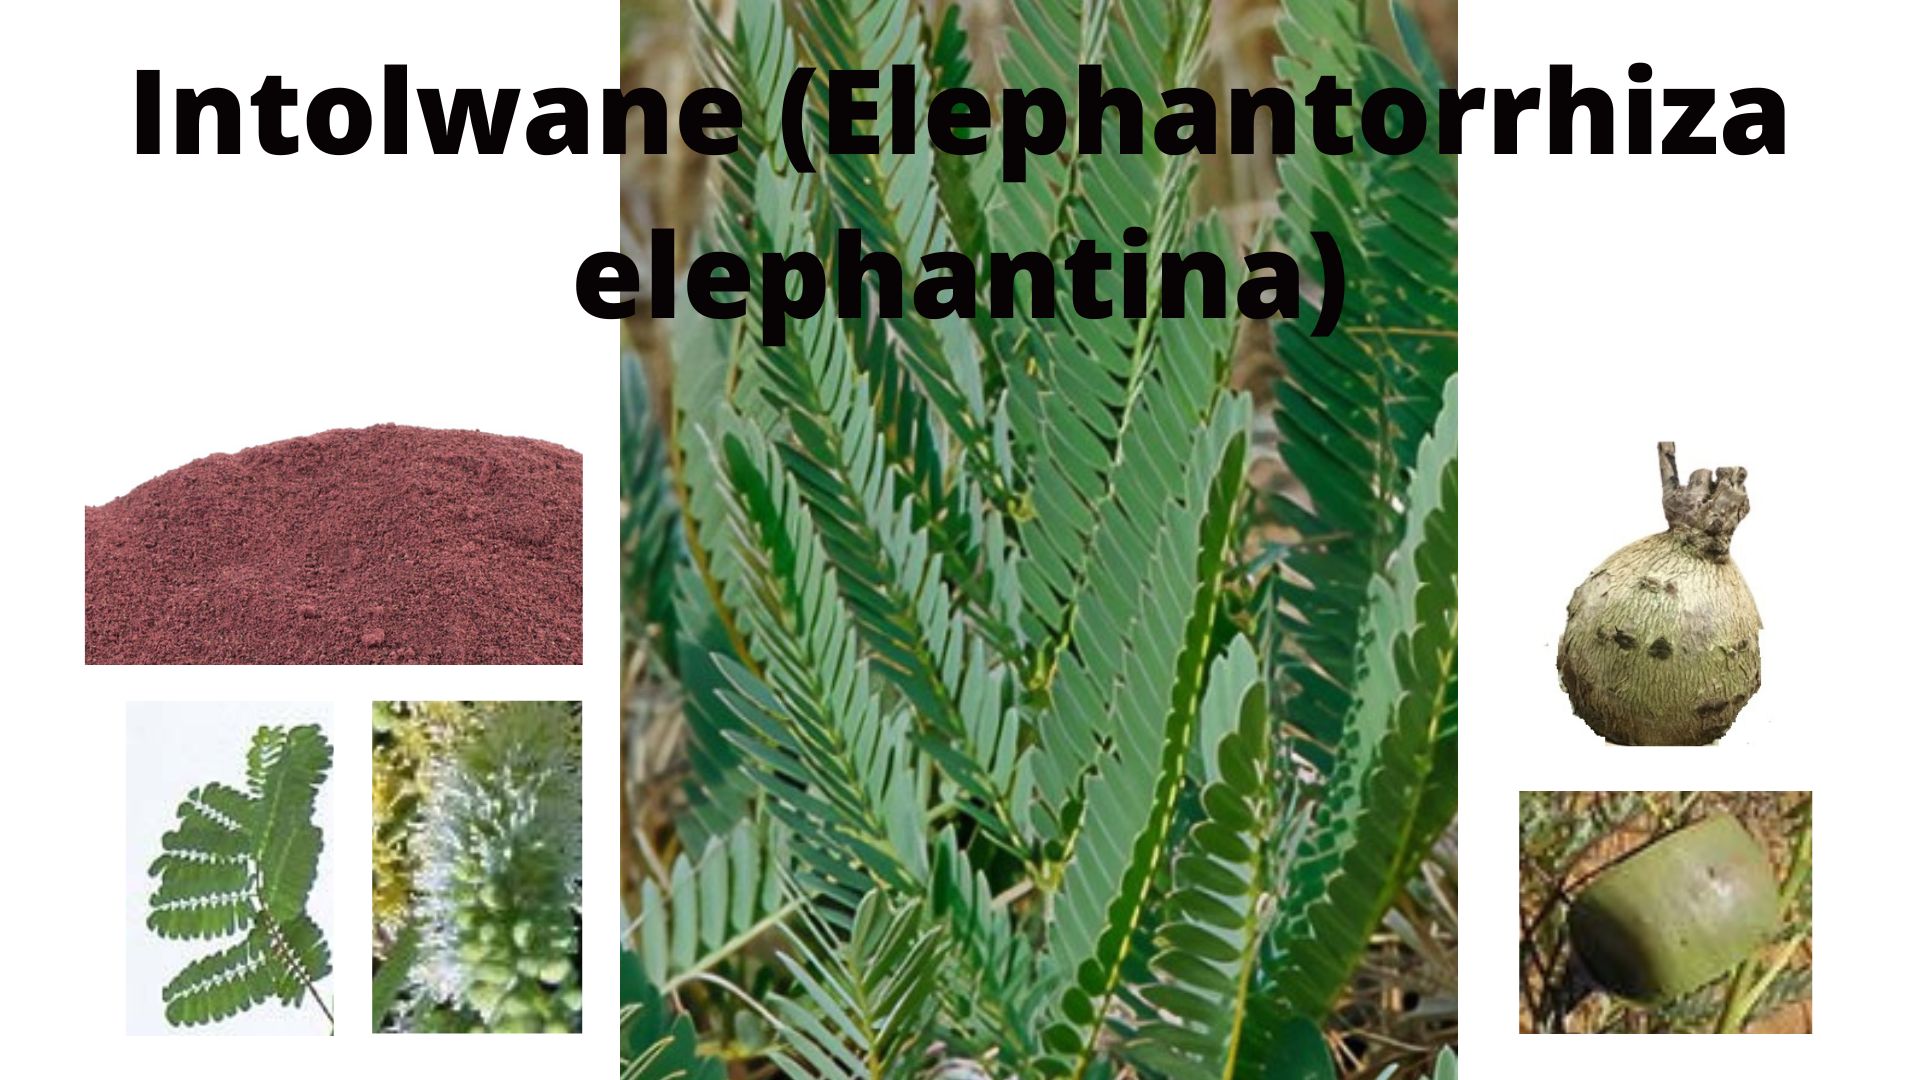 You are currently viewing Elephantorrhiza elephantina (Intolwane)